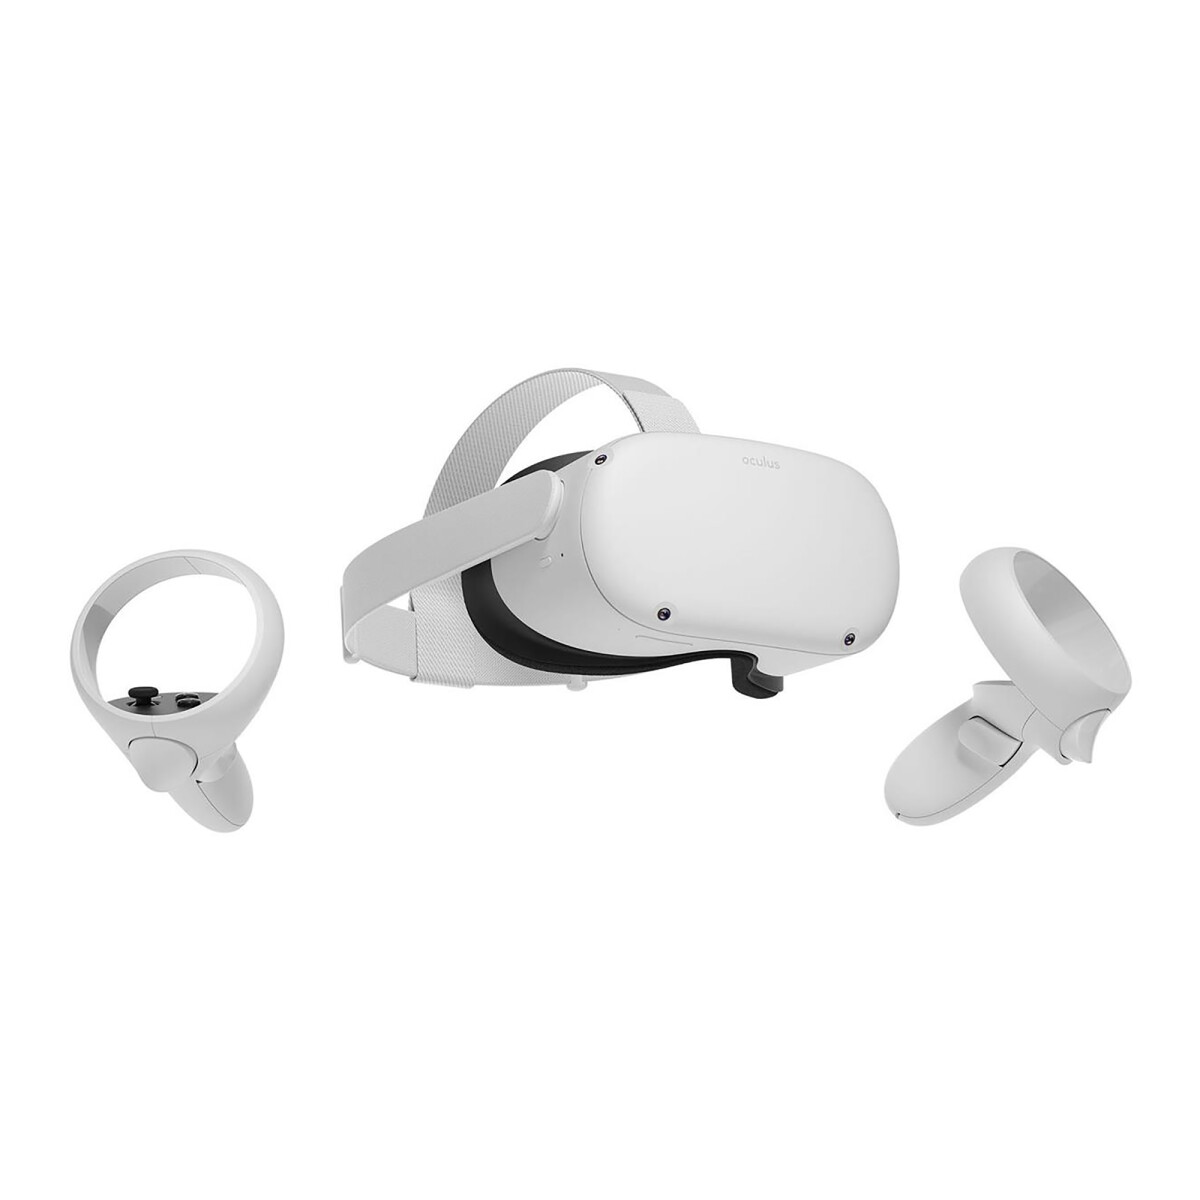 Oculus - Lentes de Realidad Virtual Quest 2 - 1832X1920 por Ojo. 60 Hz, 72 Hz, 90 Hz. Audio Posicion - 001 